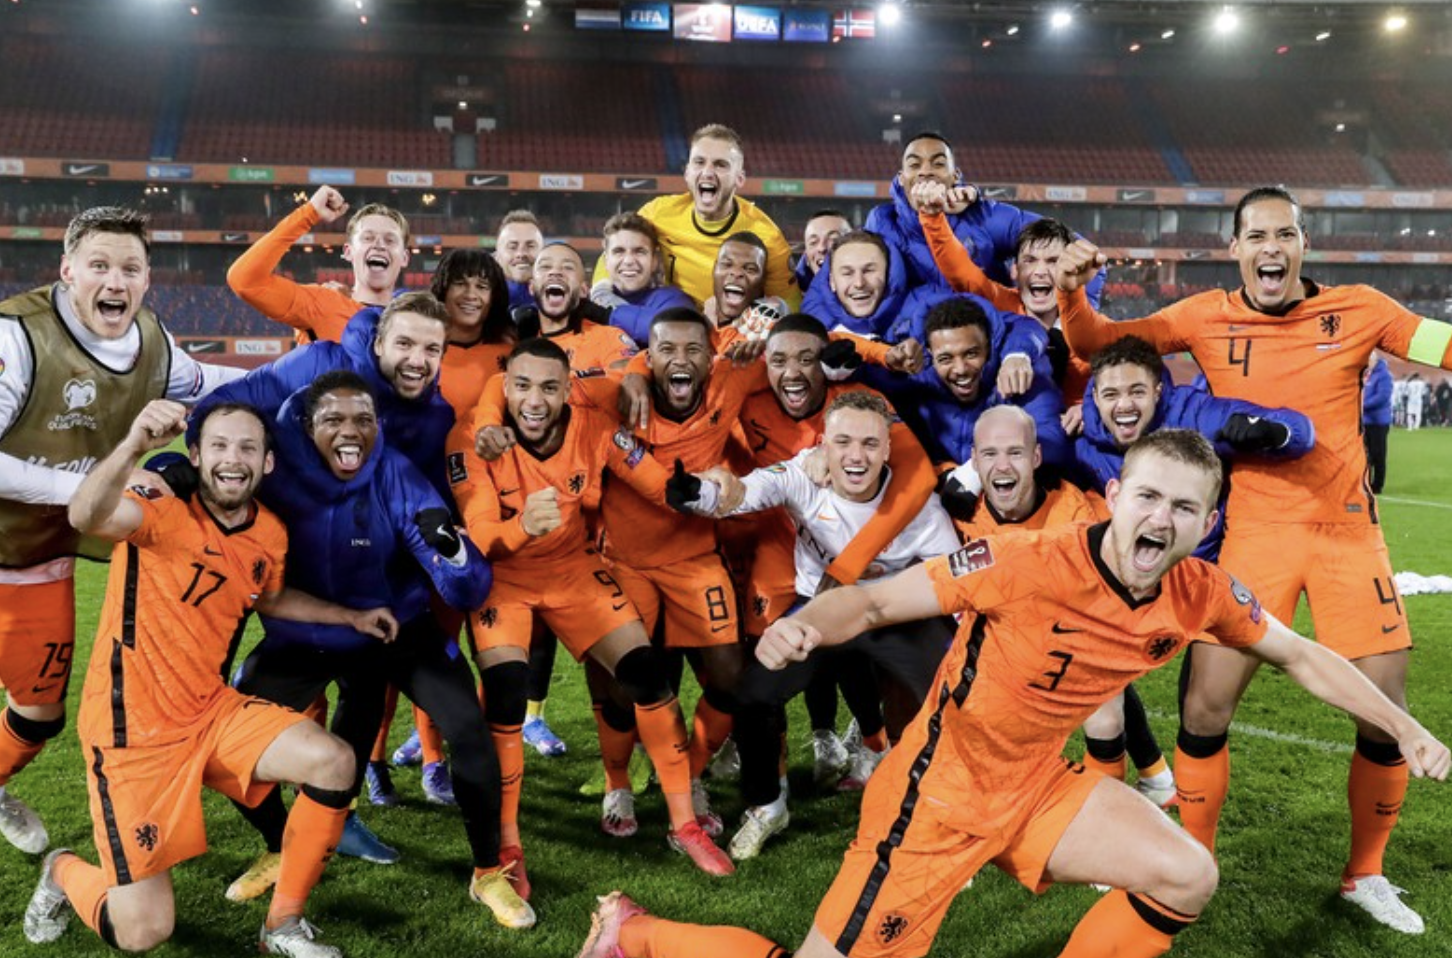 Netherlands squad 2021